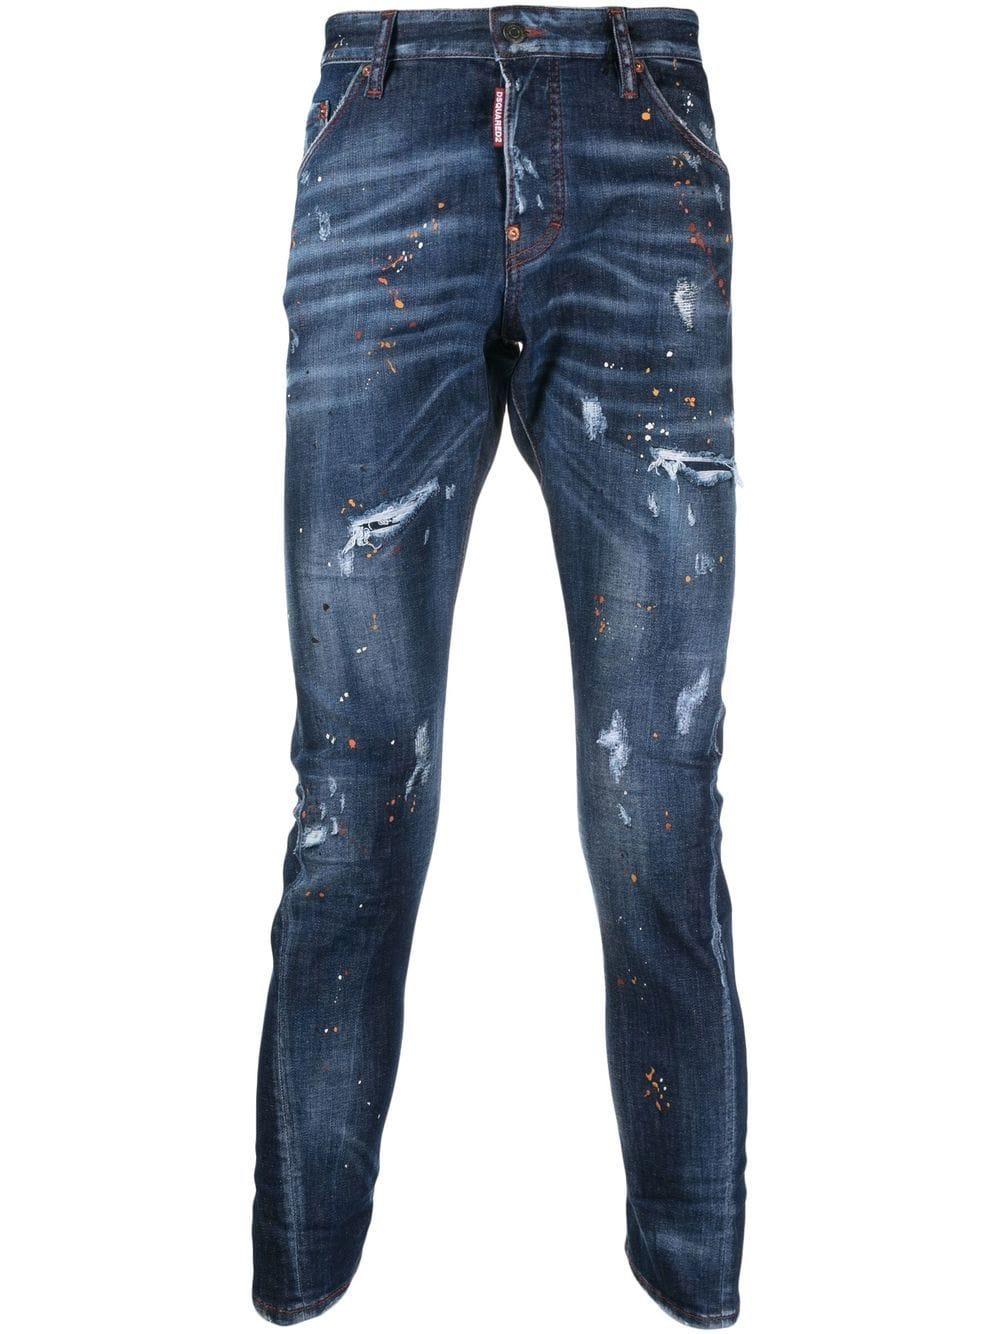 FW22男士棉质牛仔裤